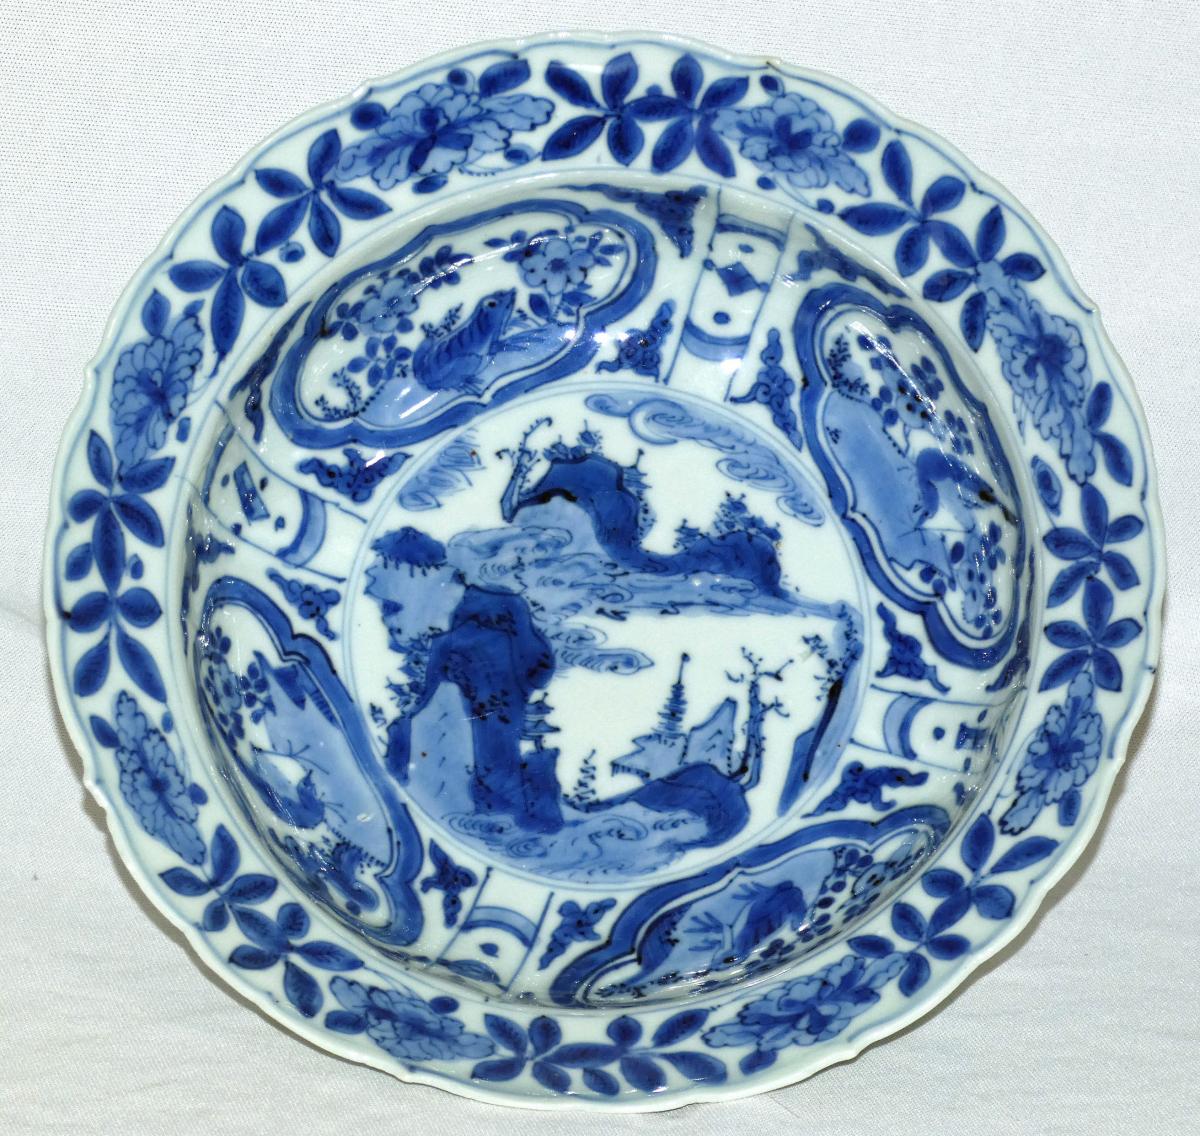 Ming Porcelain Kraak Klapmuts Bowl